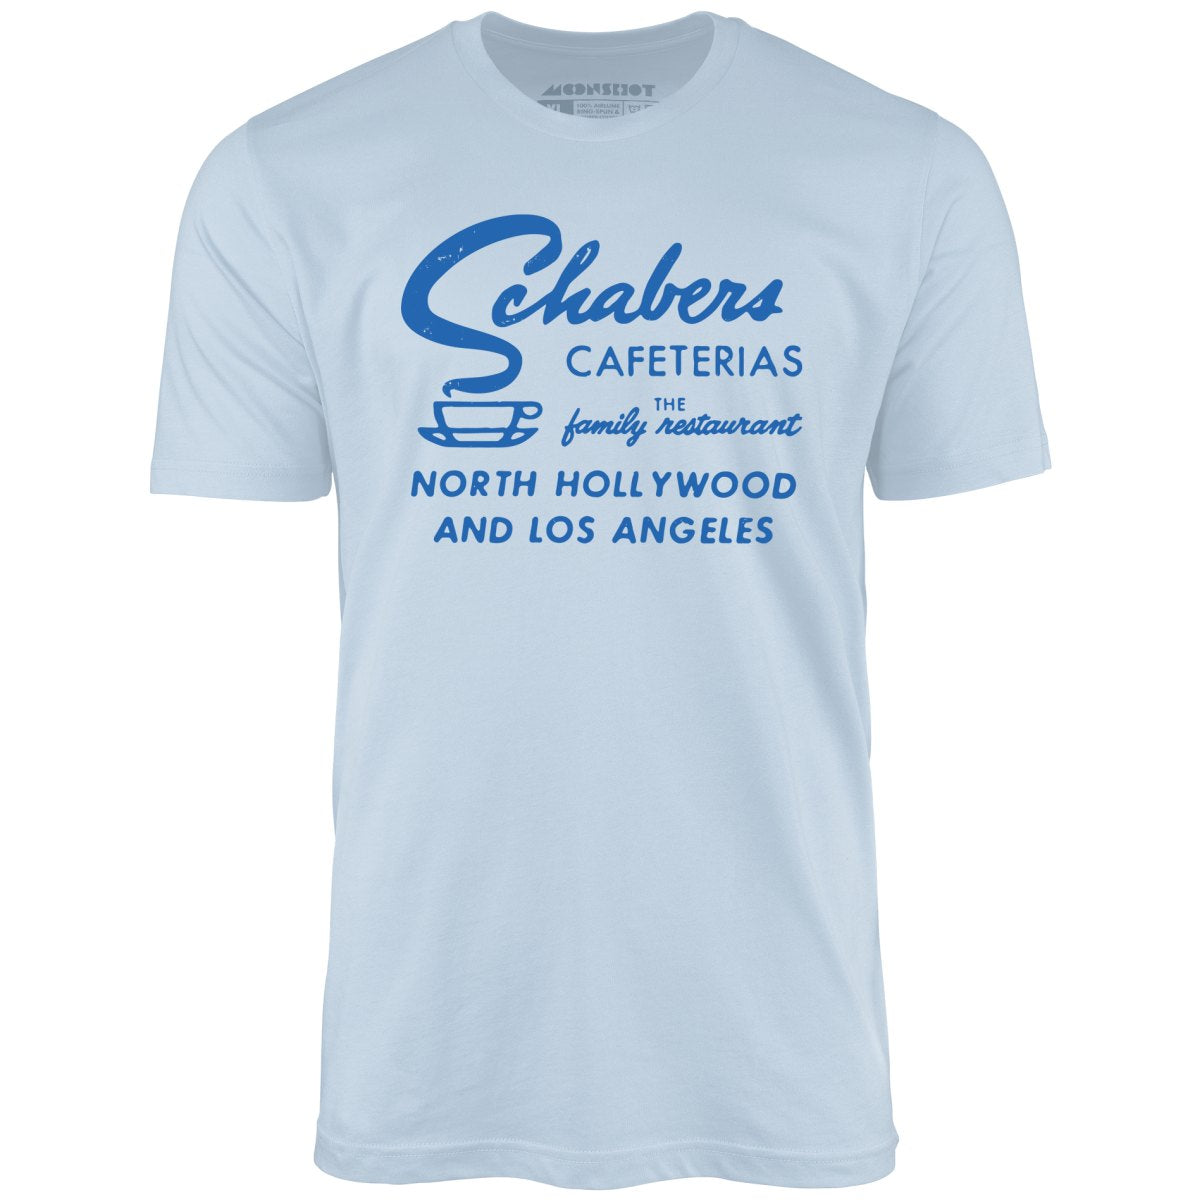 Schabers Cafeterias - Los Angeles, CA - Vintage Restaurant - Unisex T-Shirt